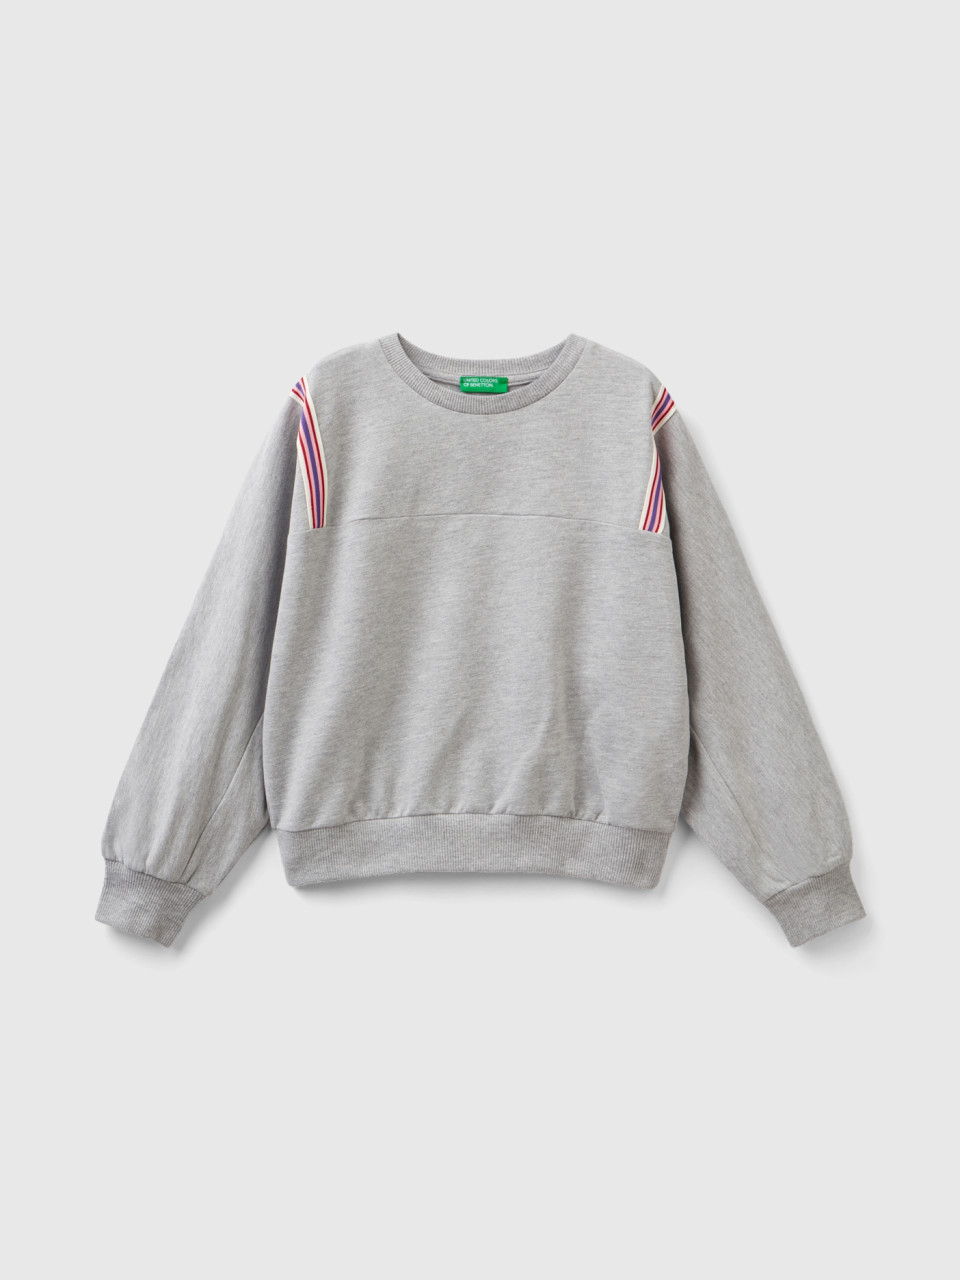 Benetton, Sweatshirt With Striped Details, Gray, Kids